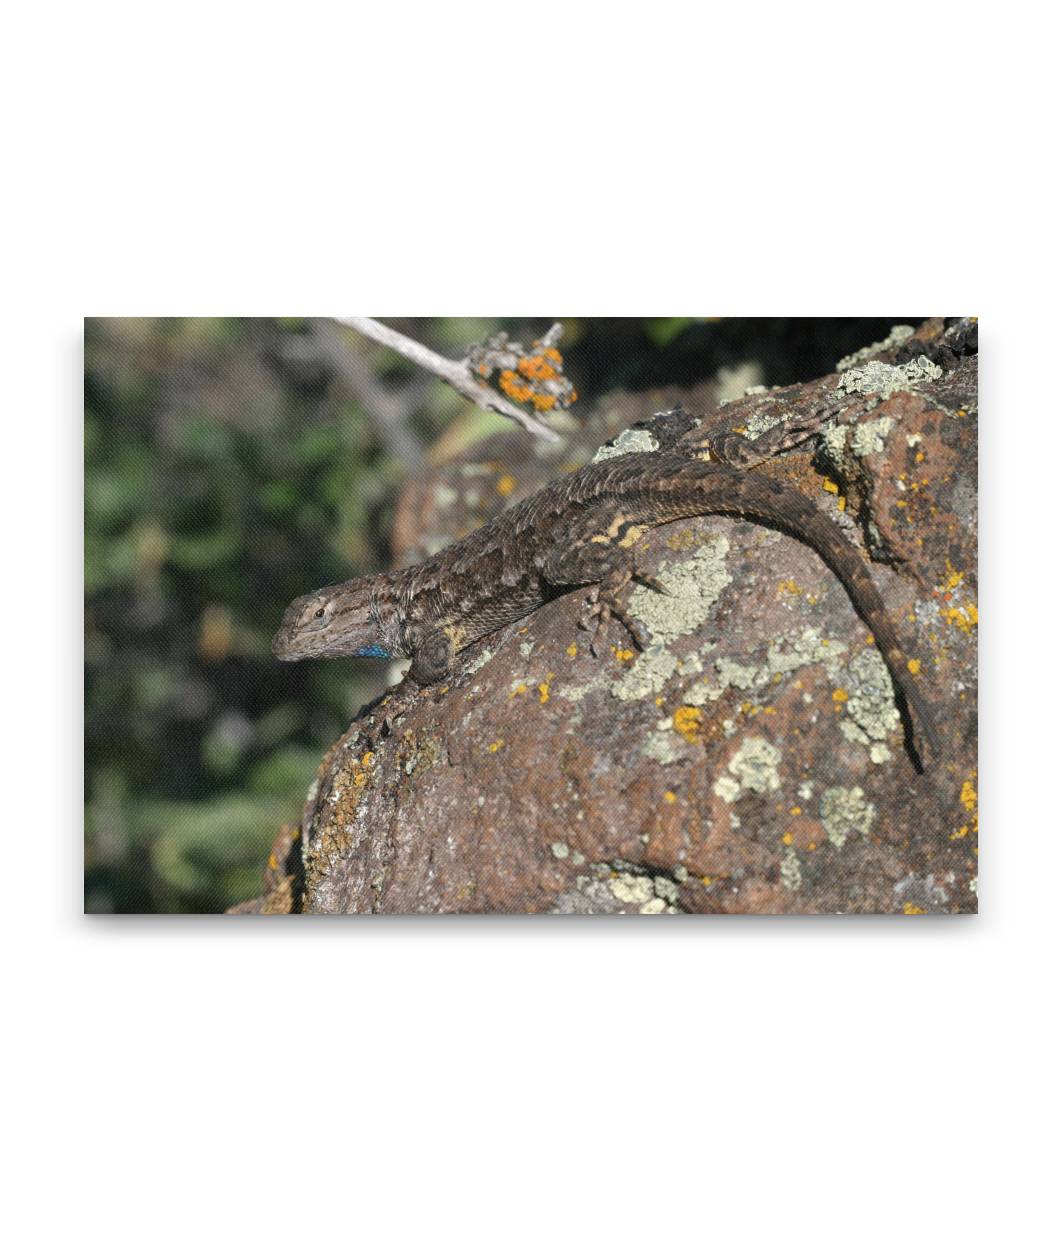 Western Fence Lizard, Hogback Mountain, Klamath Falls, Oregon, USA